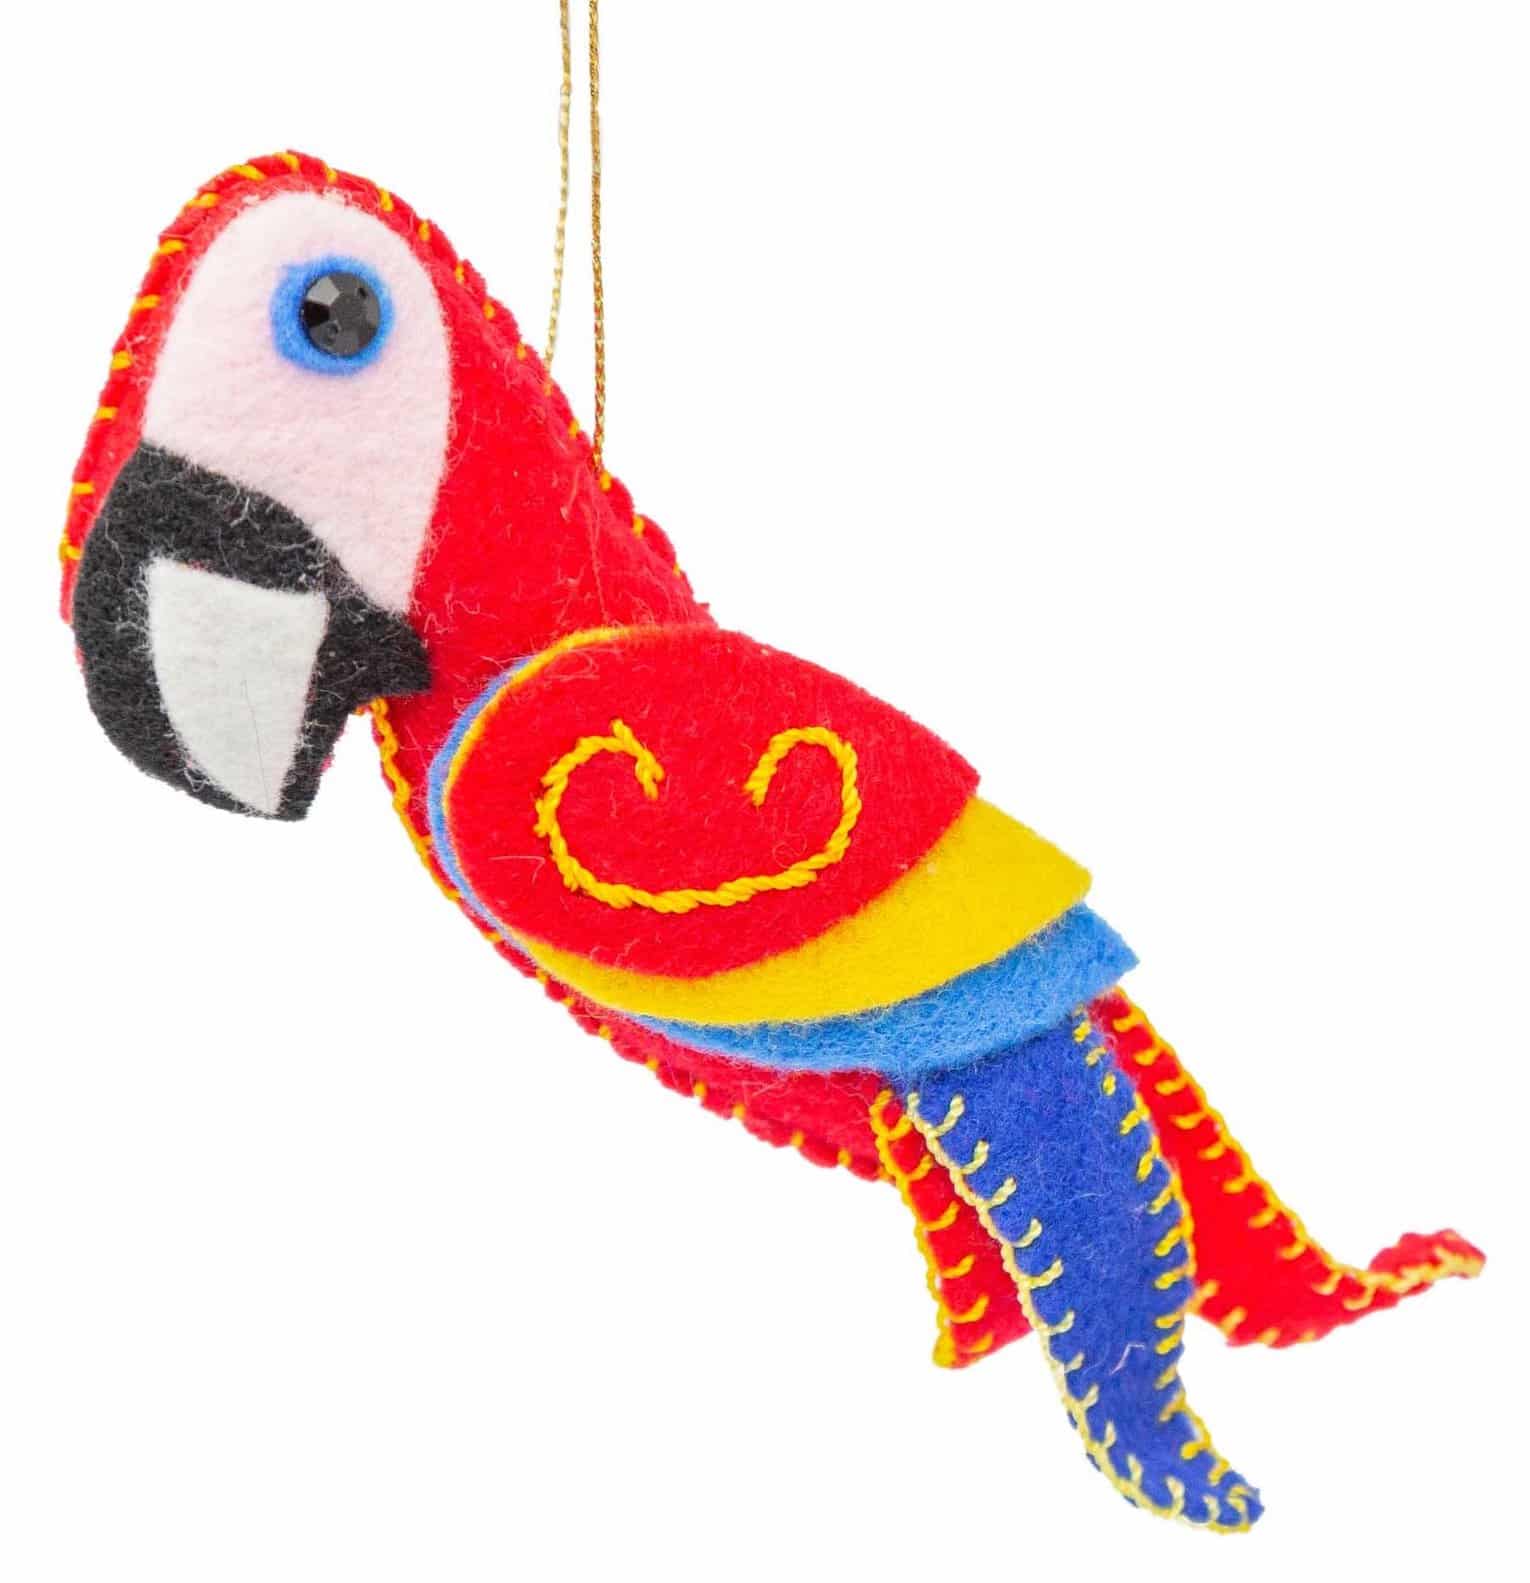 Felt Red Macaw Ornament